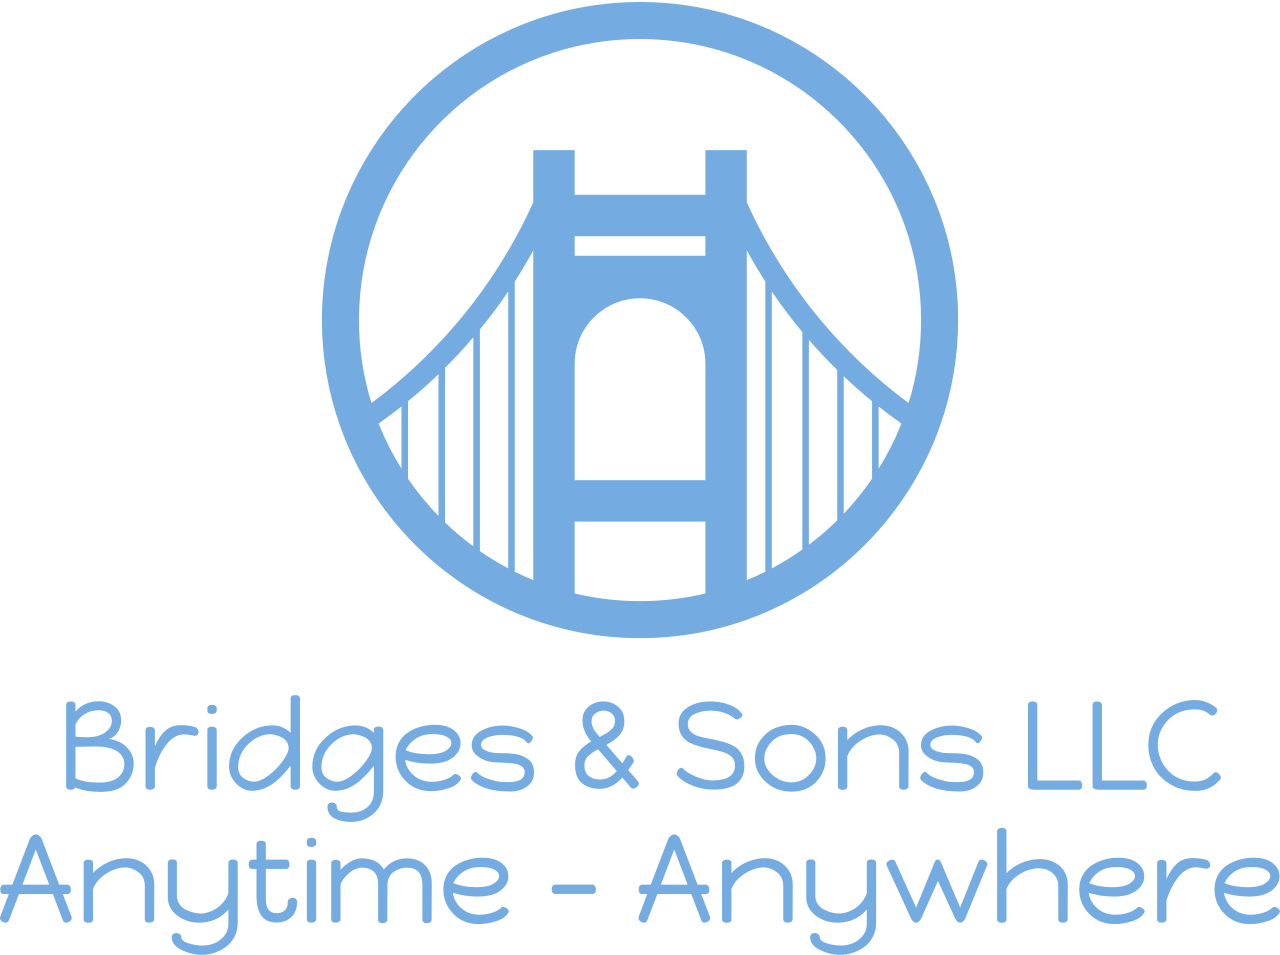 Bridges & Sons LLC's logo